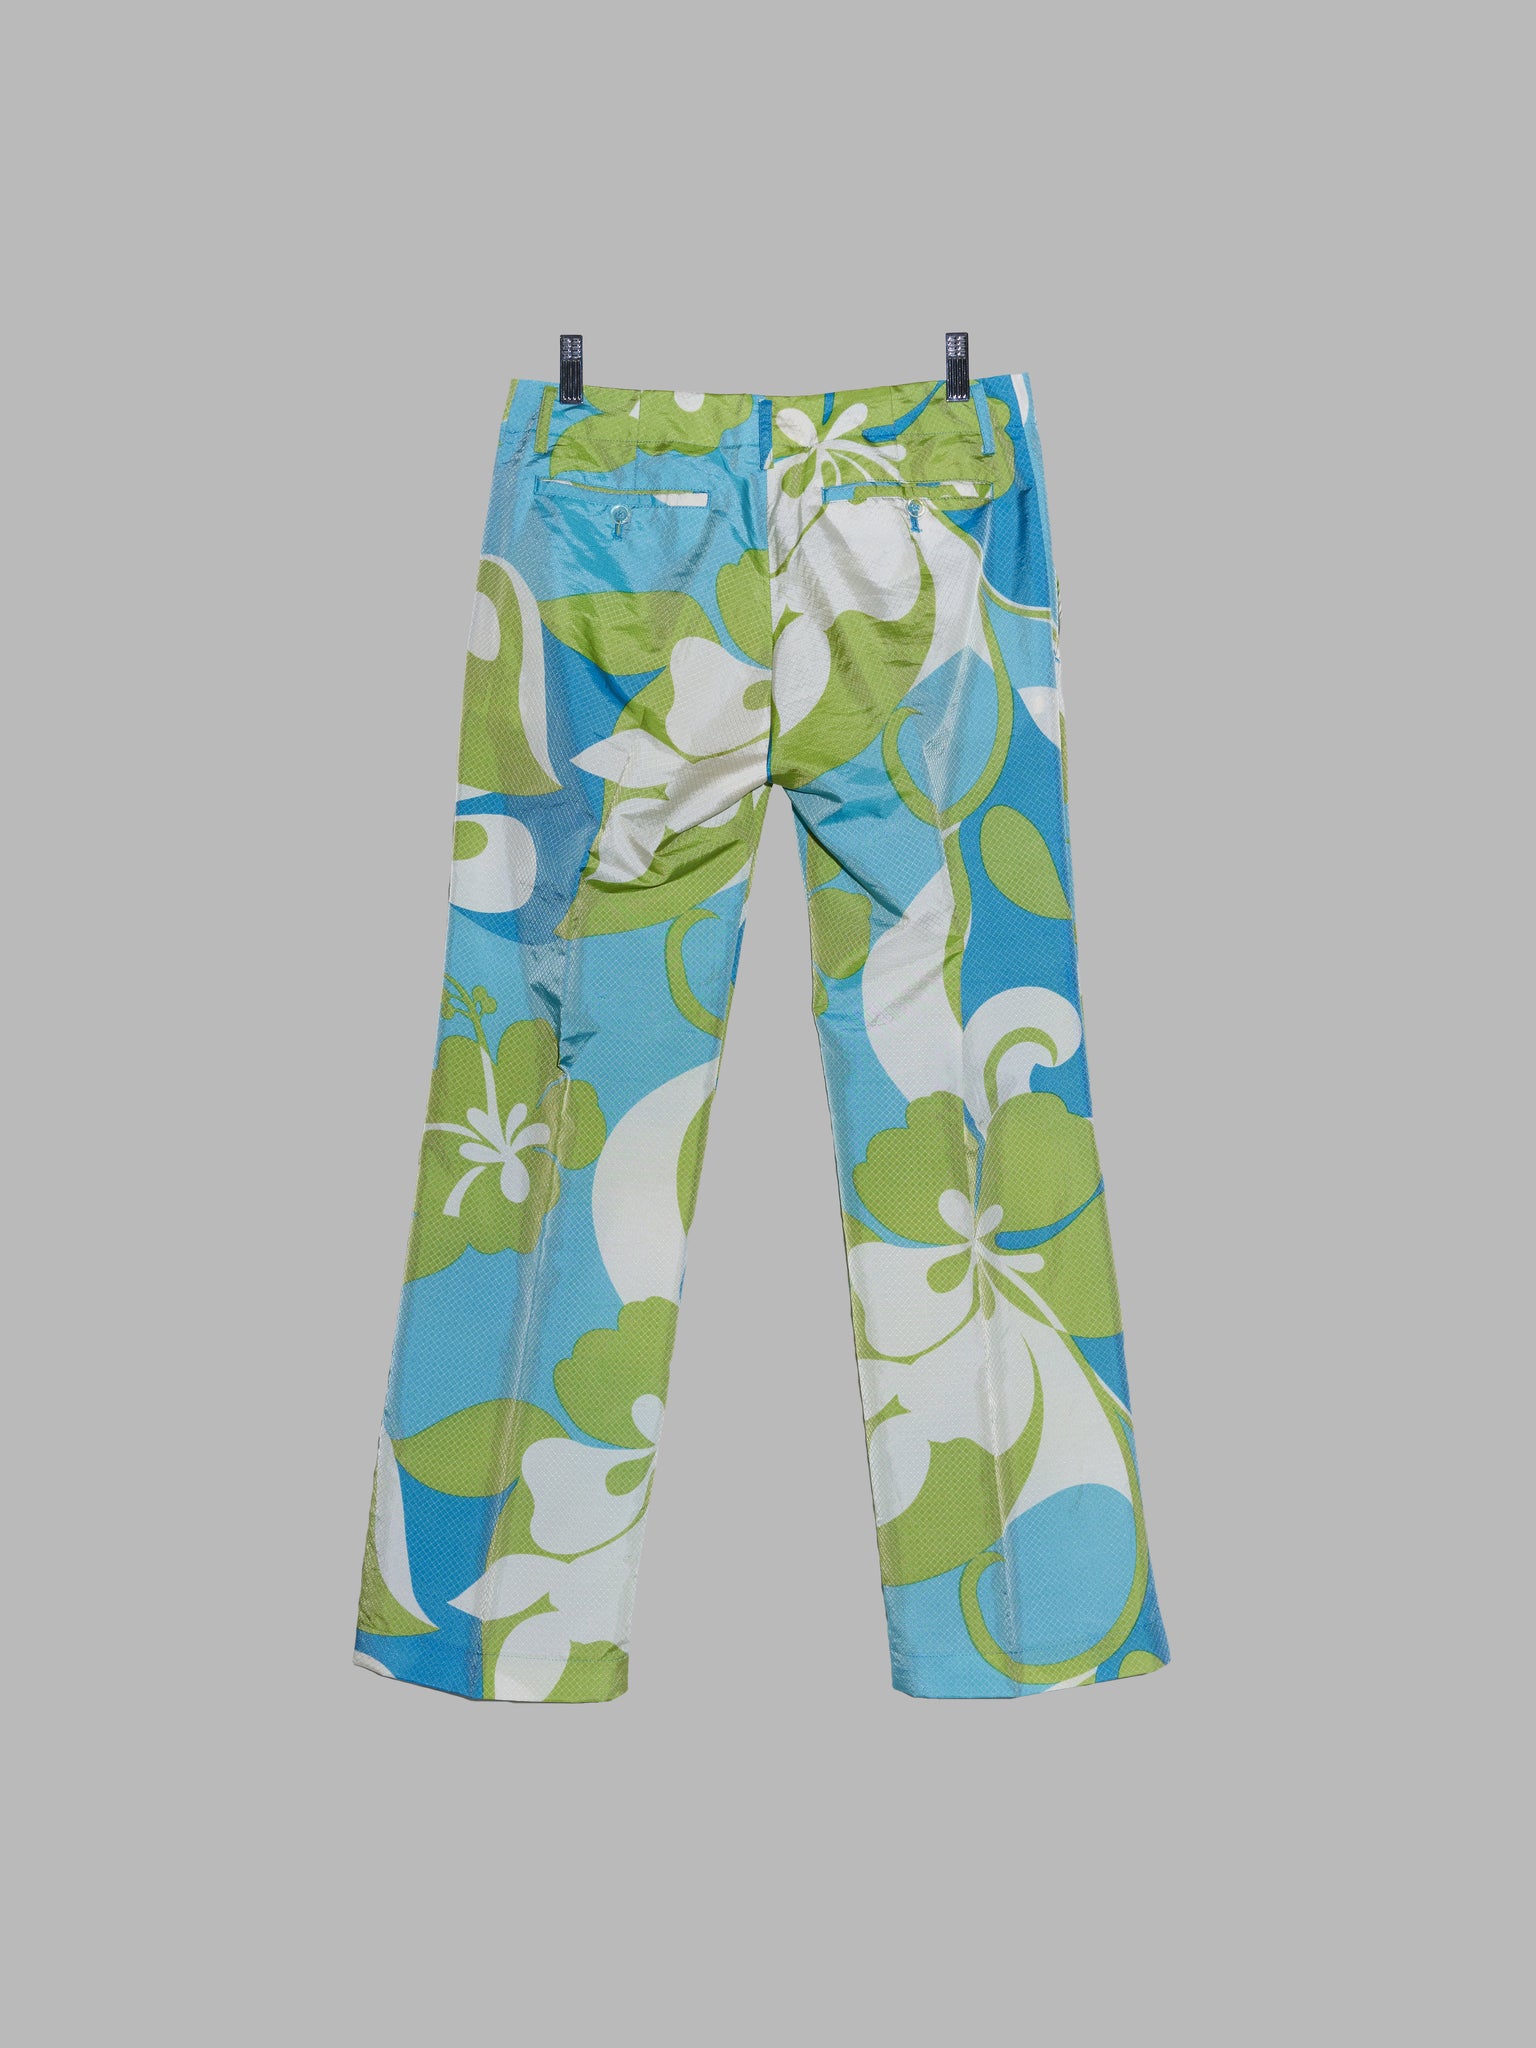 Junya Watanabe Comme des Garcons SS2000 blue green floral waterproof pants - S